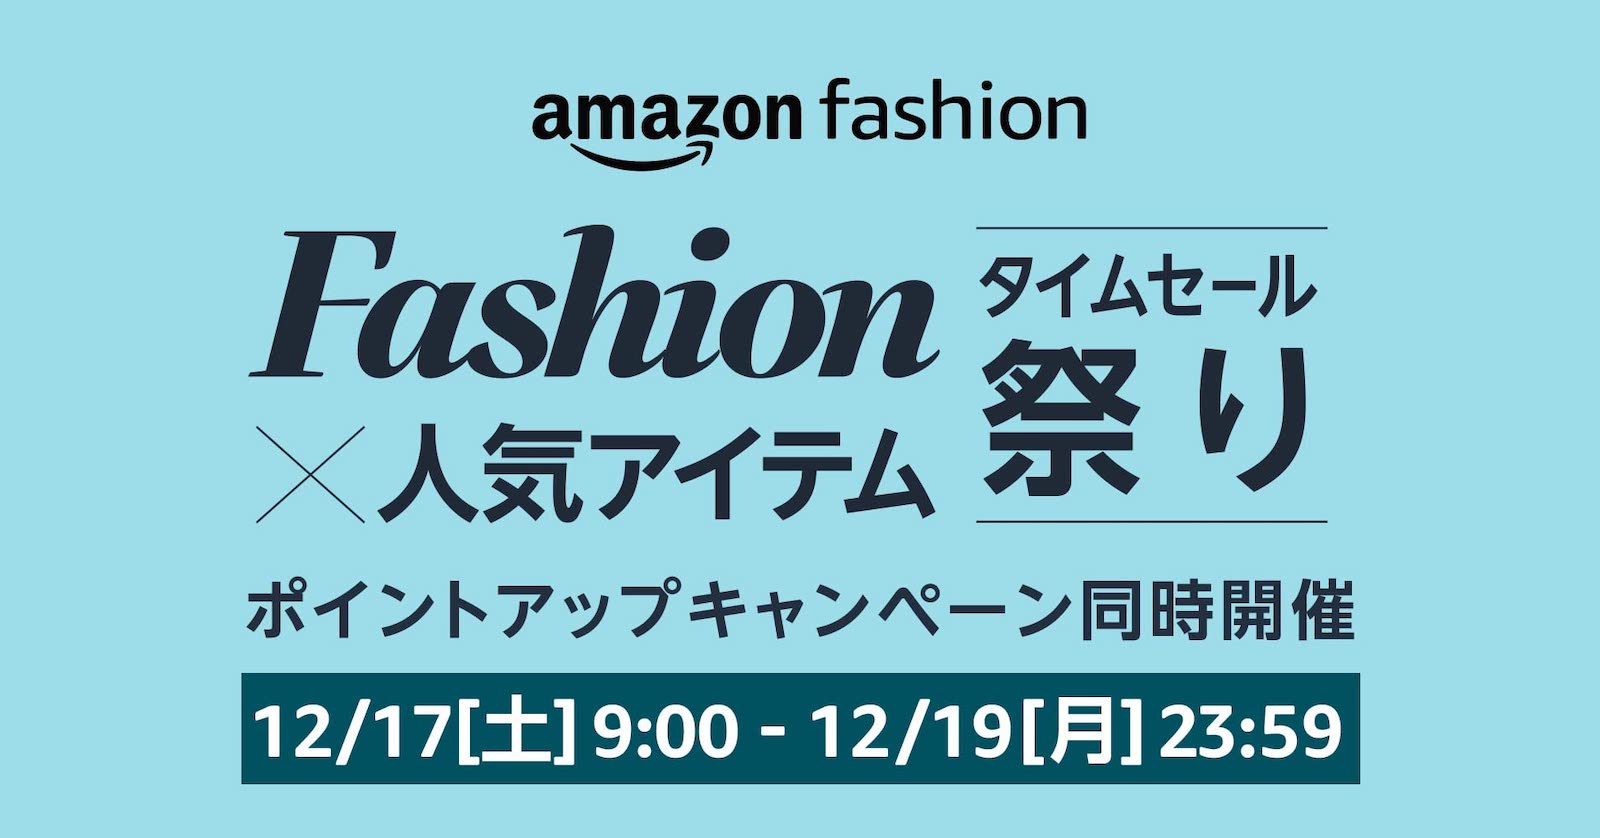 Fashion time sale festival amazon